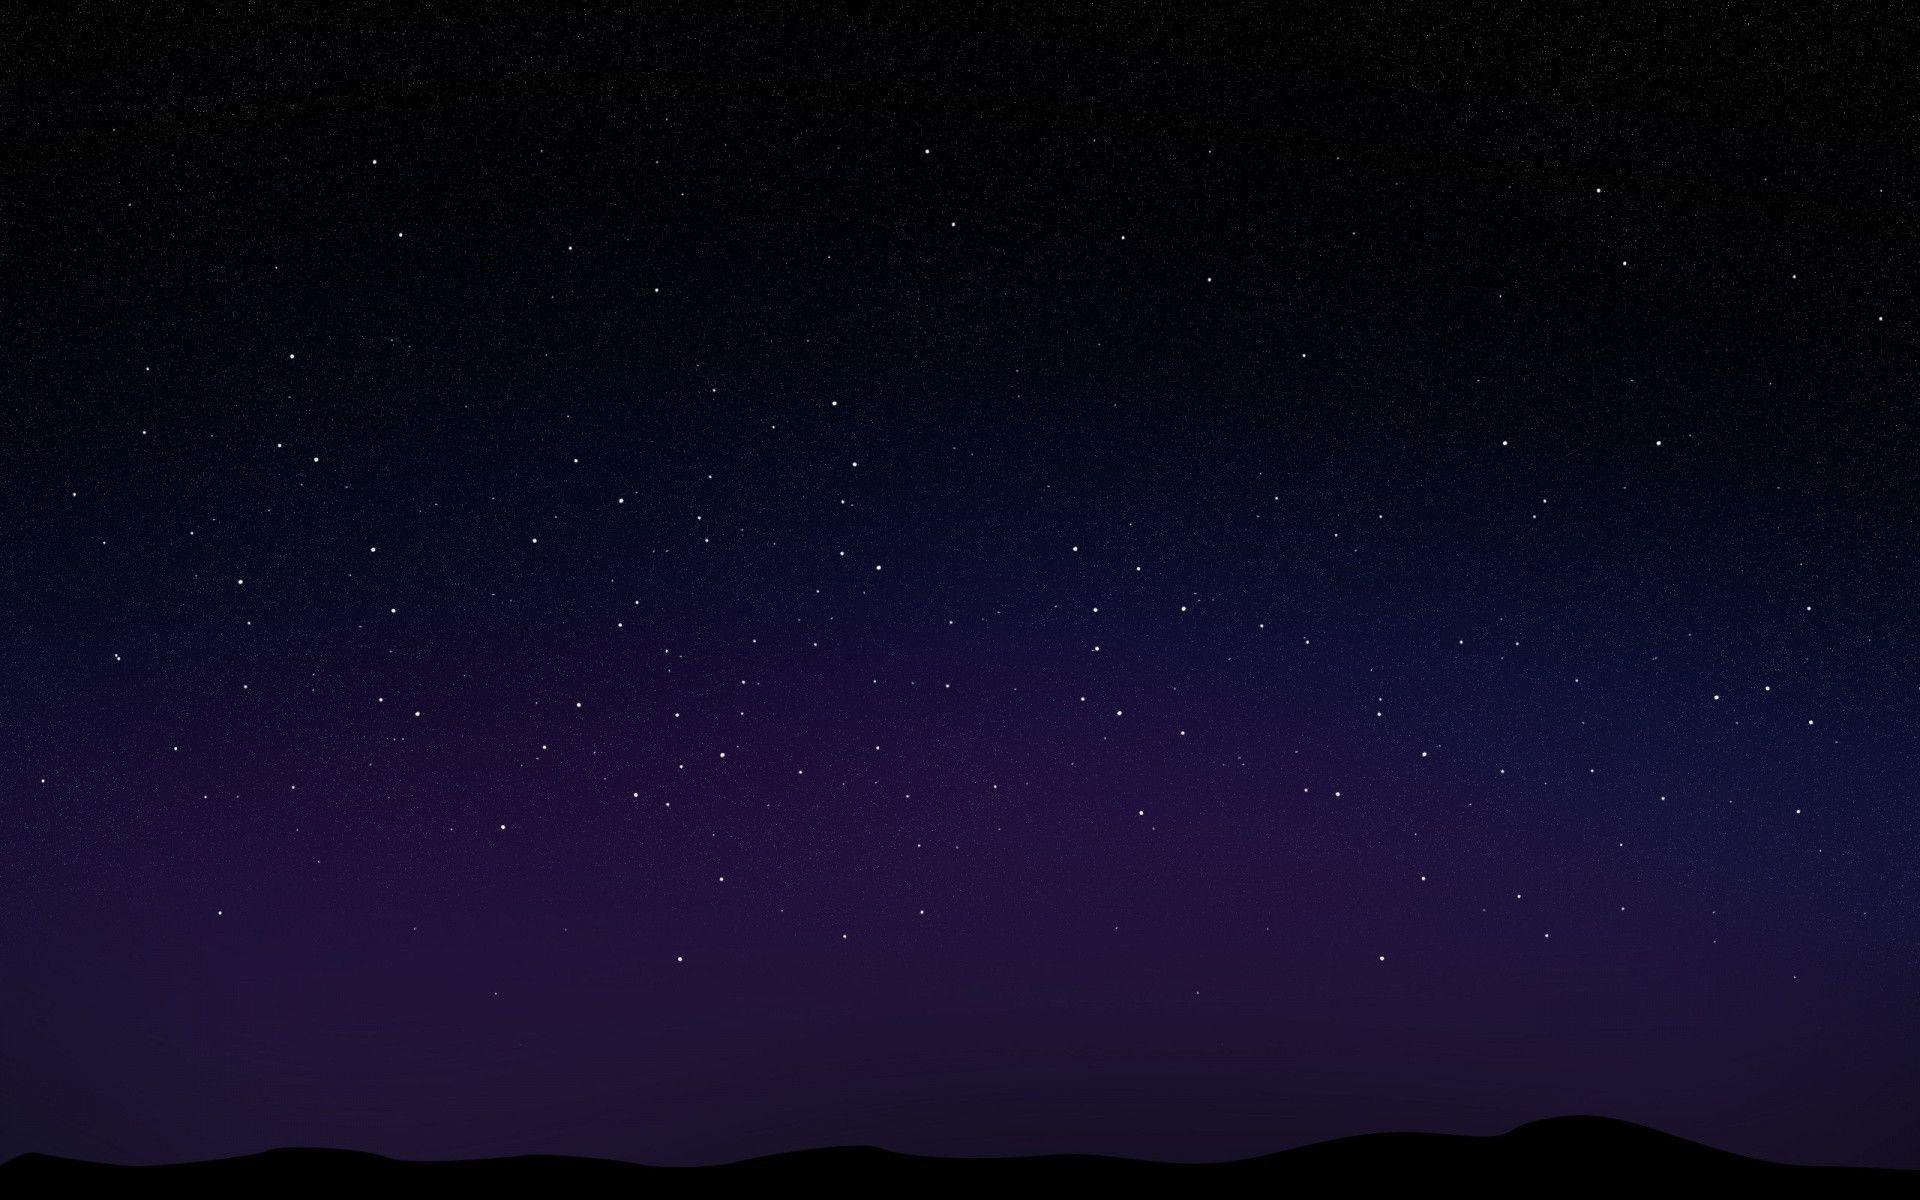 Cartoon Night Sky Wallpapers - Top Free Cartoon Night Sky Backgrounds